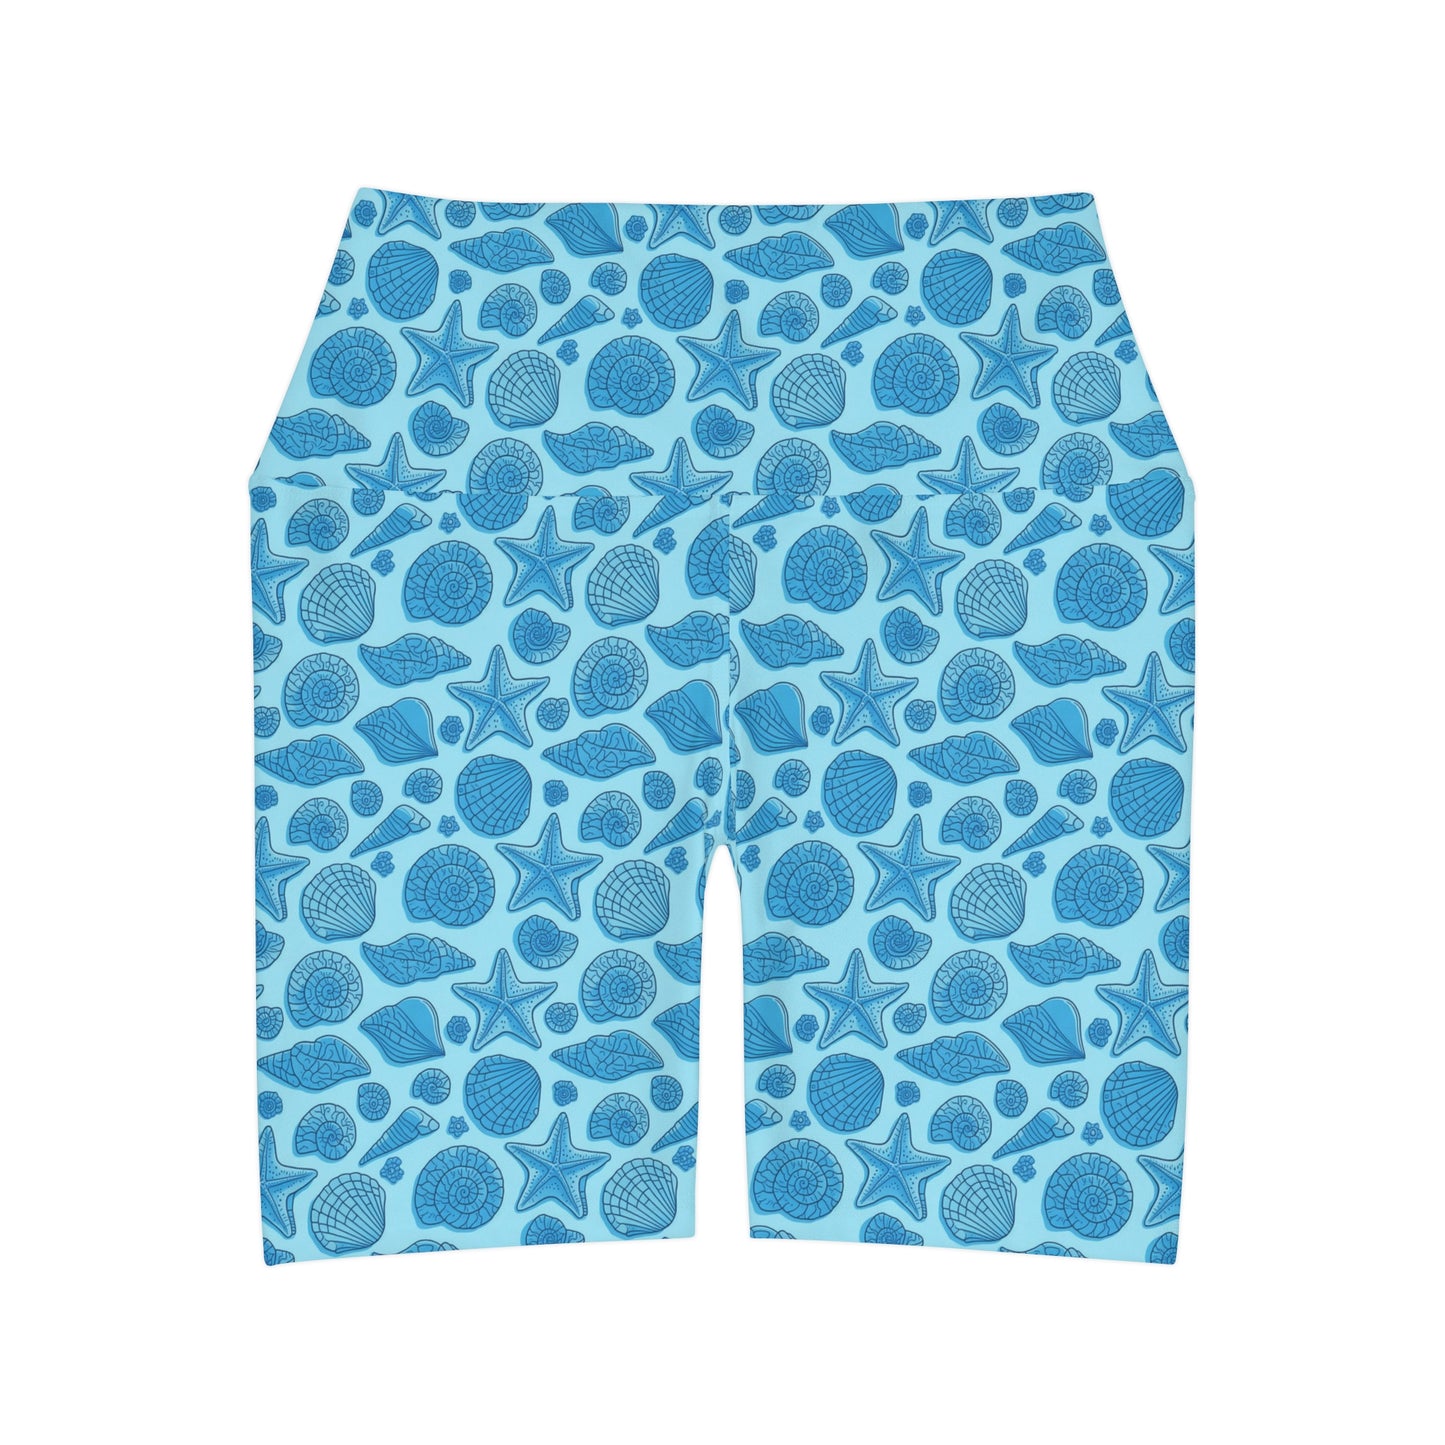 Ocean Inspired Blue Mermaid Starfish Seashell High Waisted Yoga Shorts, Workout Gear, Beach/Pool Comfort